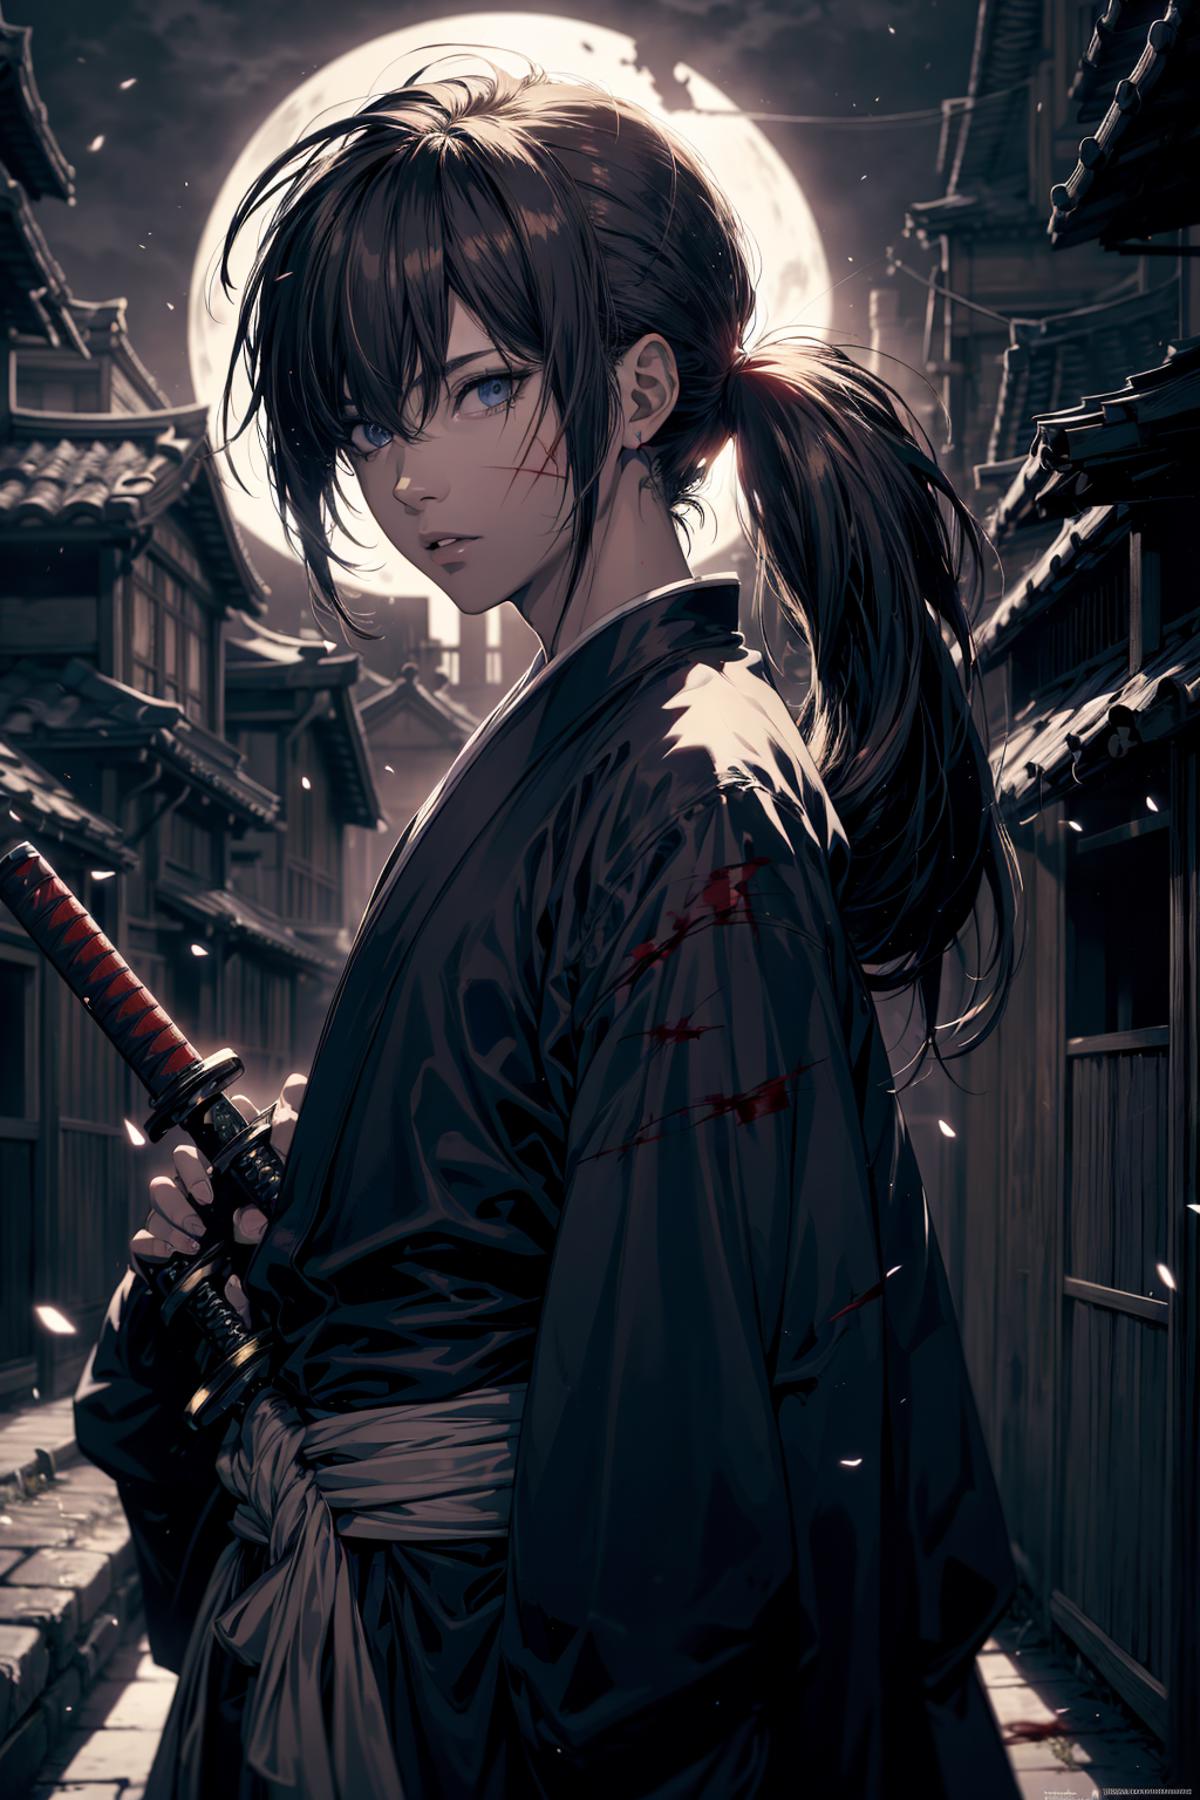 Kenshin Himura (Rurouni Kenshin) image by barusu07